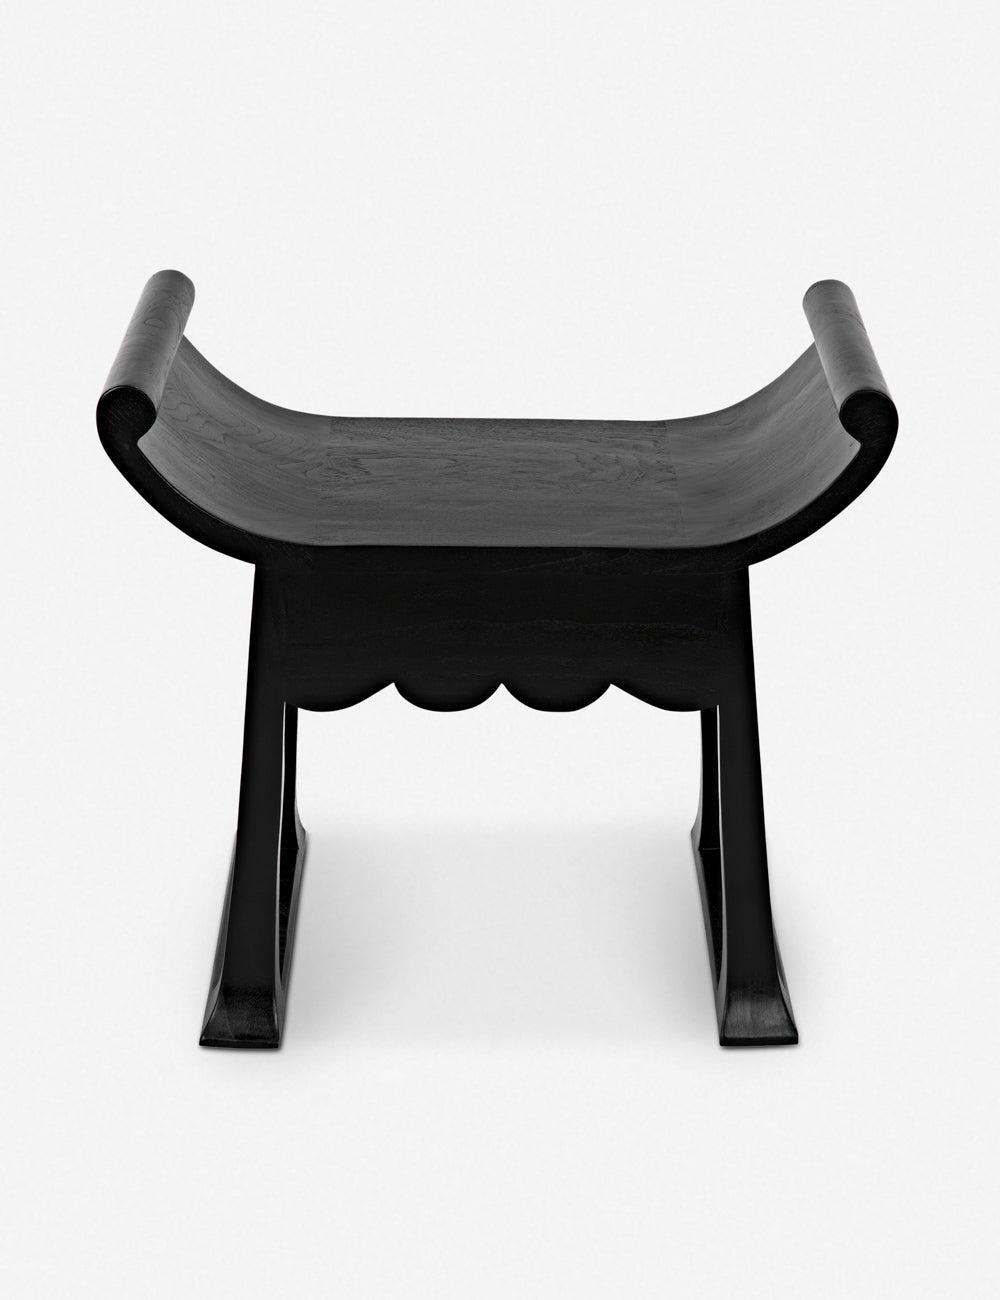 Mortimer Round Wood and Metal Side Table in Sleek Black